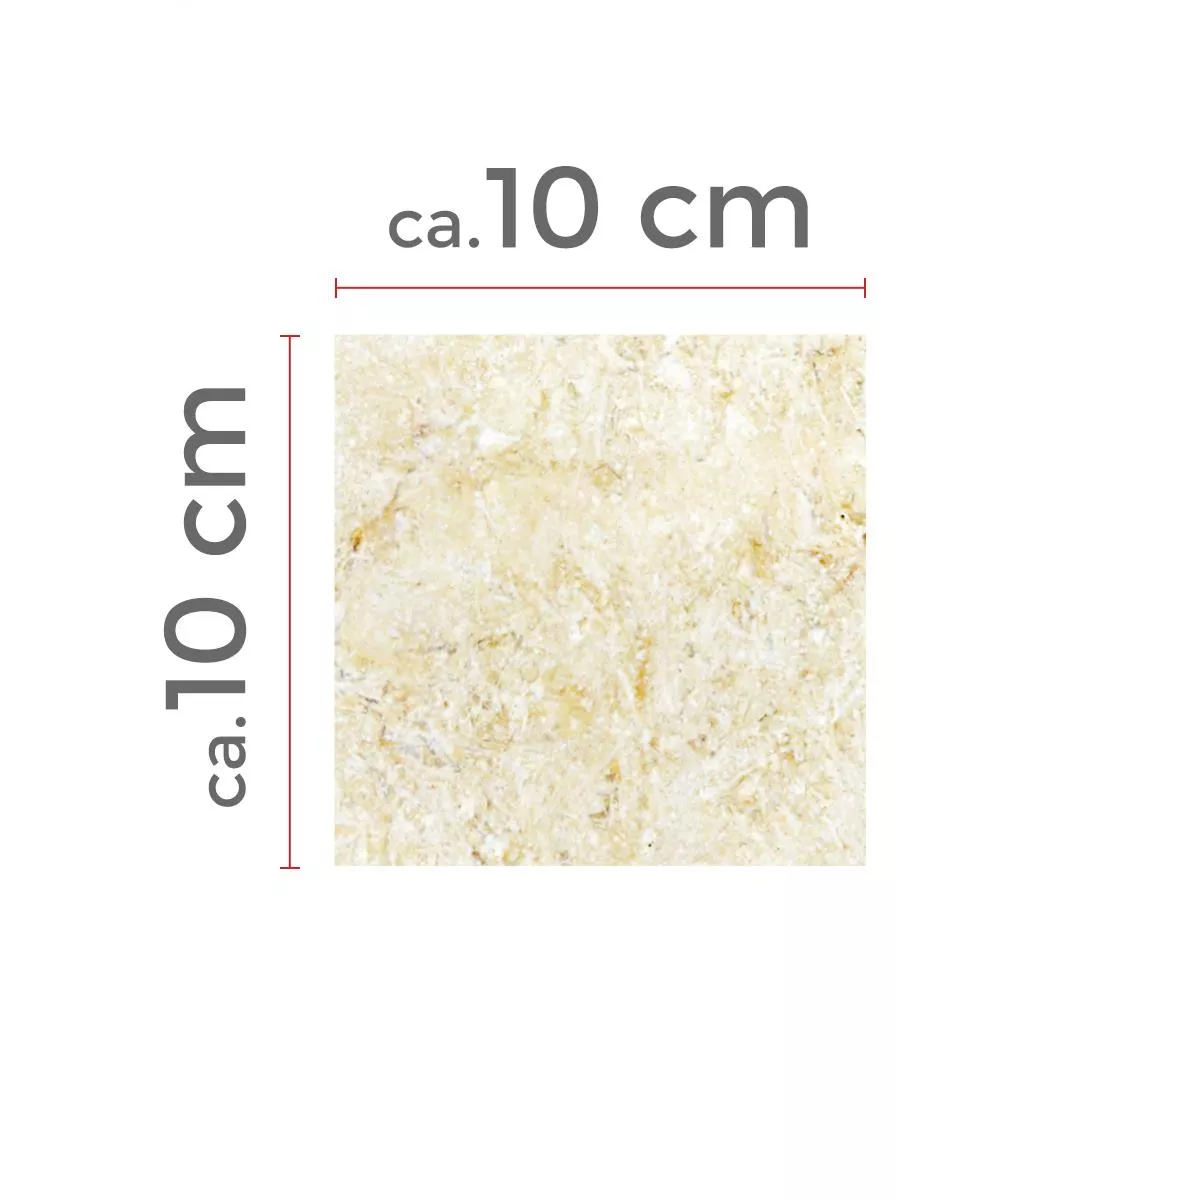 Sample Natural Stone Tiles Limestone Garbagna Beige 10x10cm